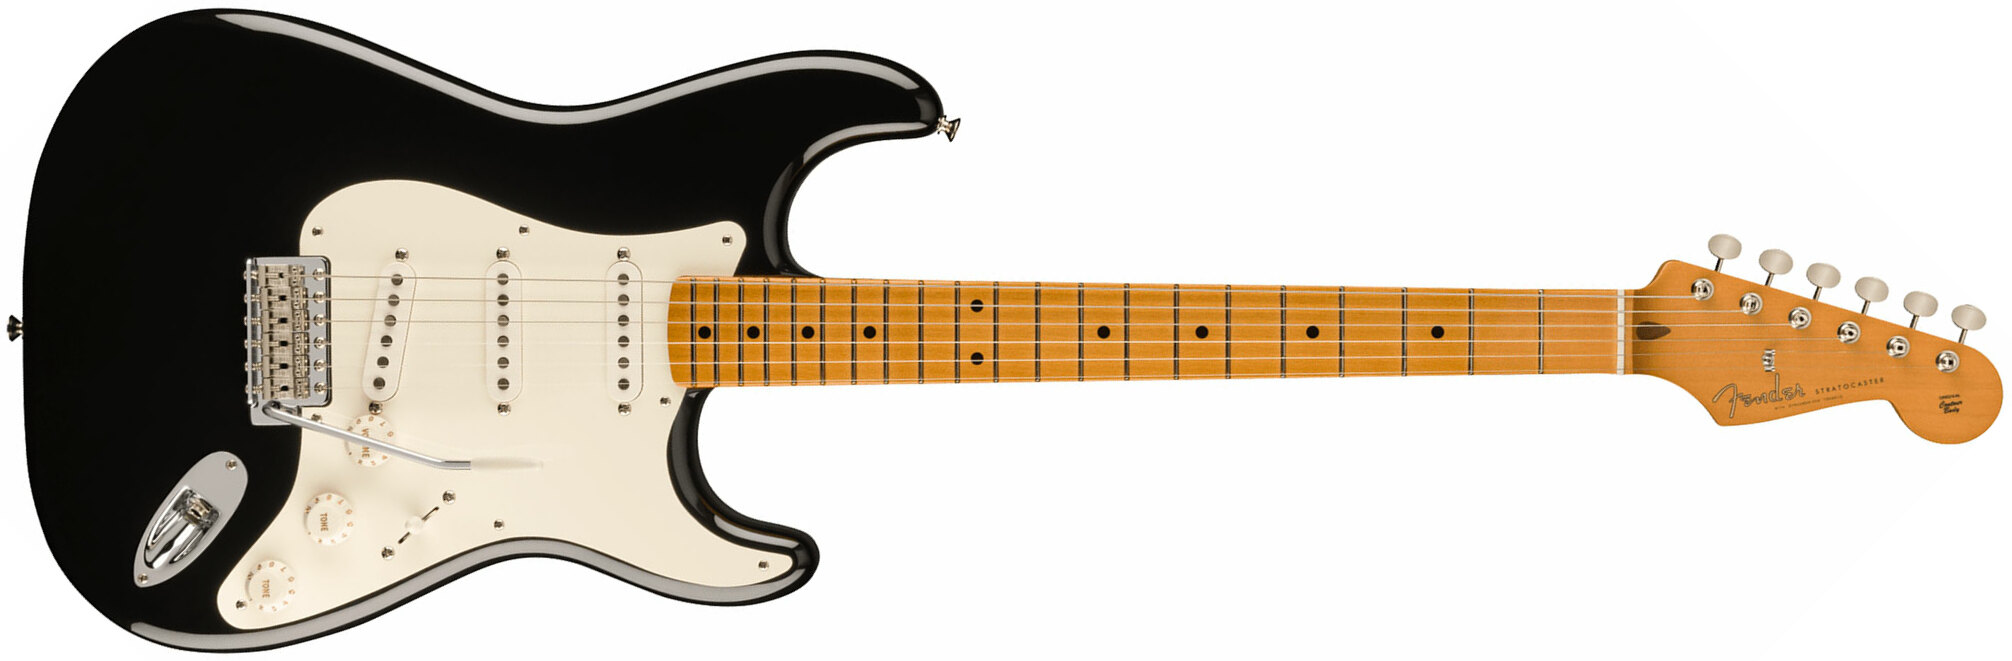 Fender Strat 50s Vintera 2 Mex 3s Trem Mn - Black - Str shape electric guitar - Main picture